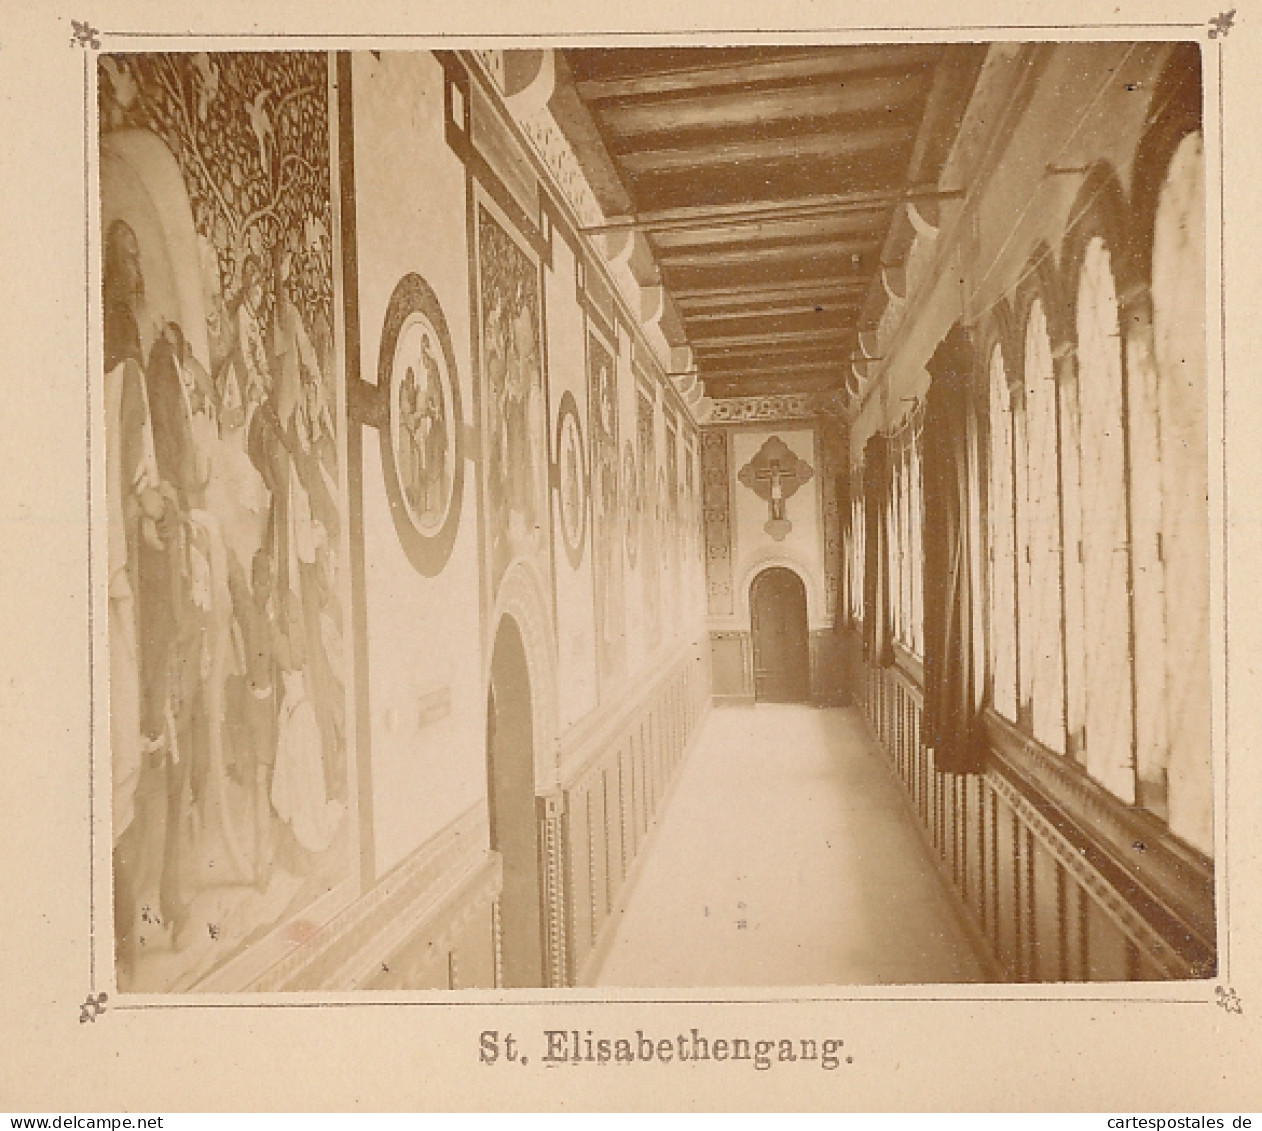 Fotoalbum 10 Fotografien, Ansicht Eisenach, Wartburg Hofraum, Landgrafenhaus, Bankettsaal, Lutherstube, Eingang 